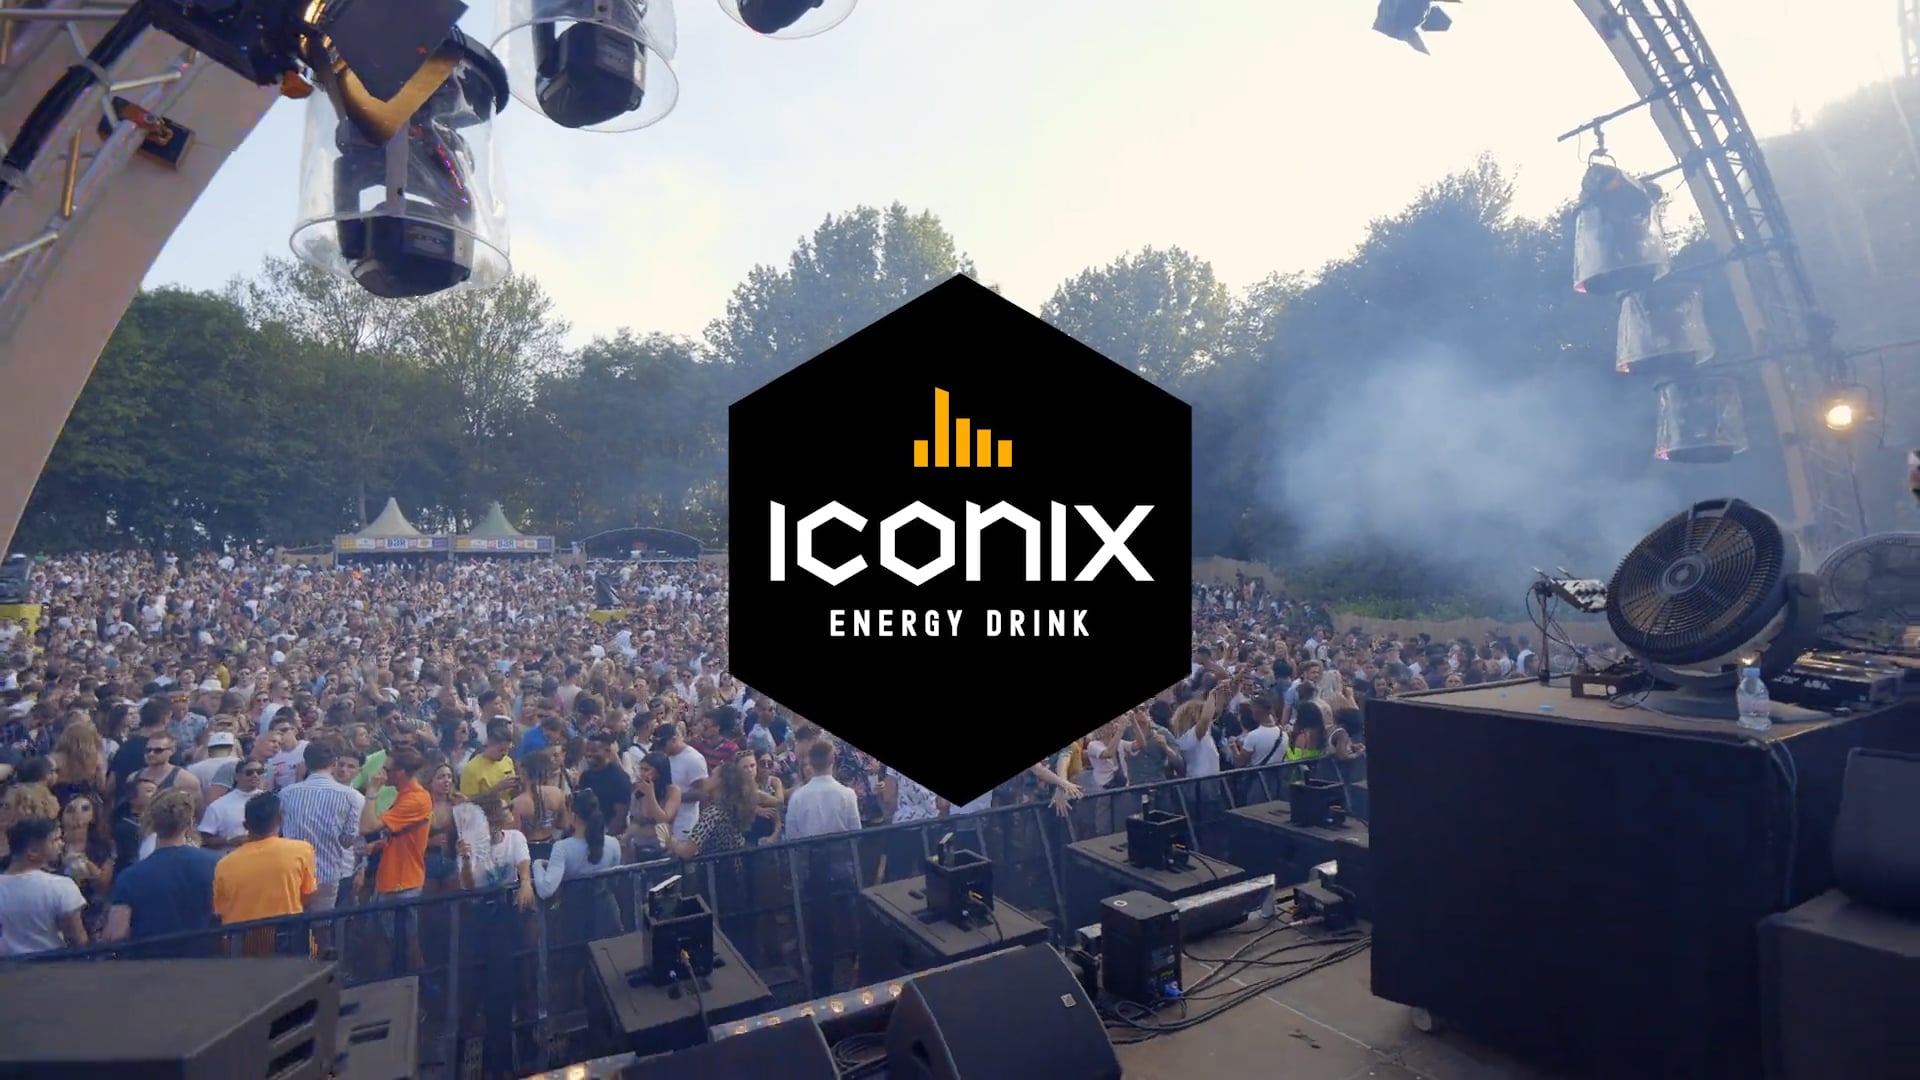 Iconix AOA Festival 2019